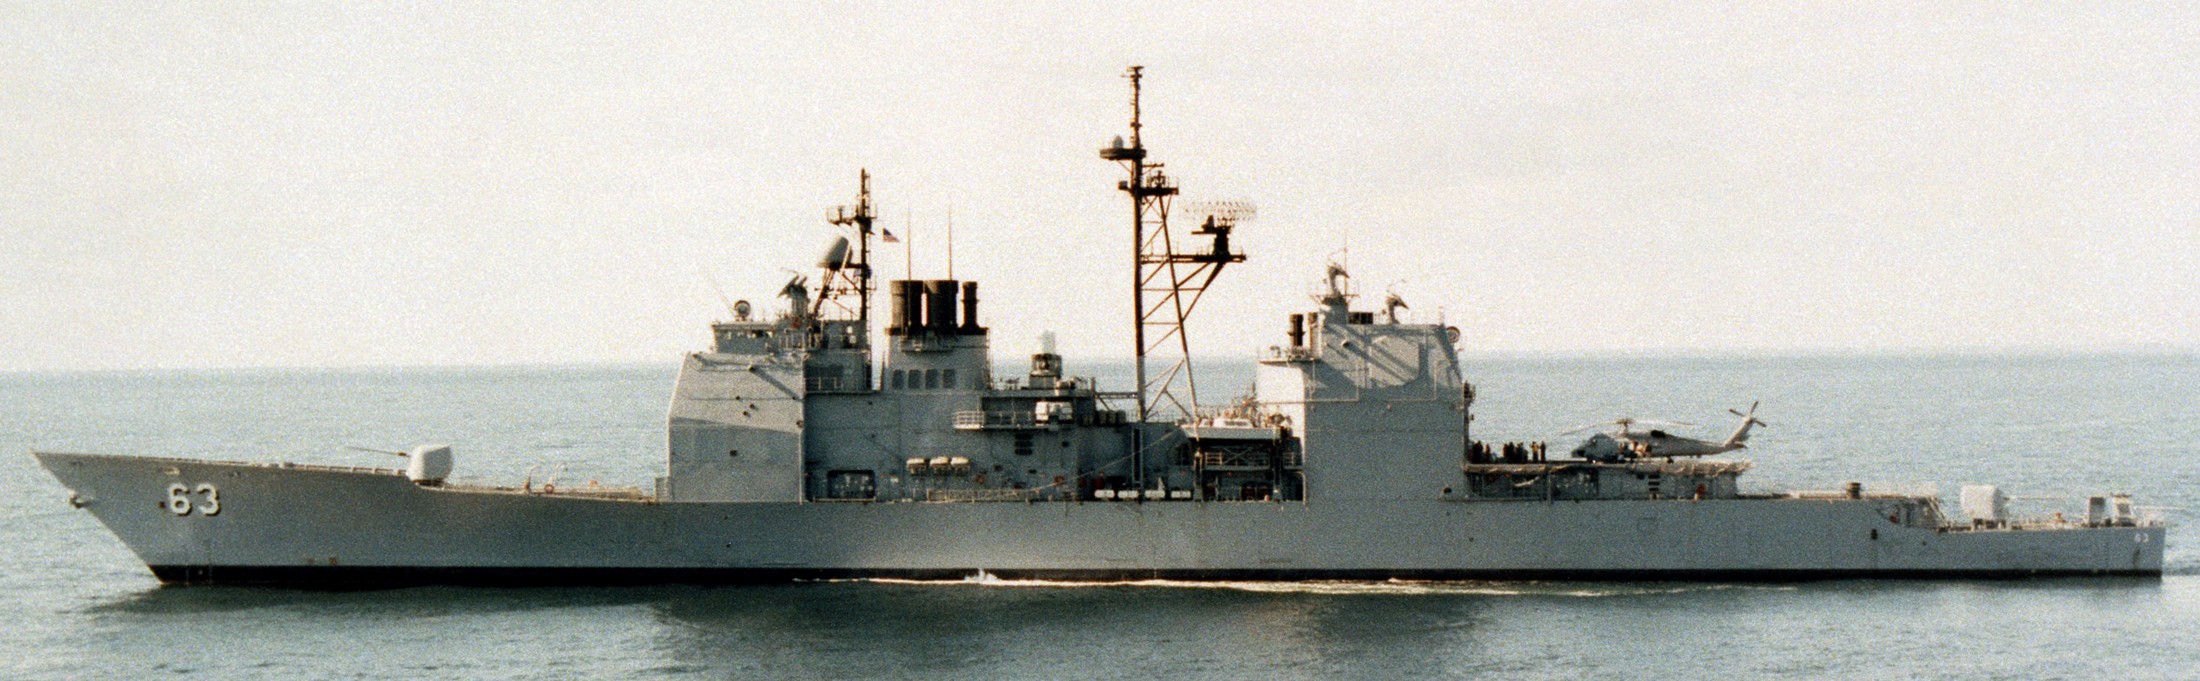 cg-63 uss cowpens ticonderoga class guided missile cruiser aegis us navy sea trials 77